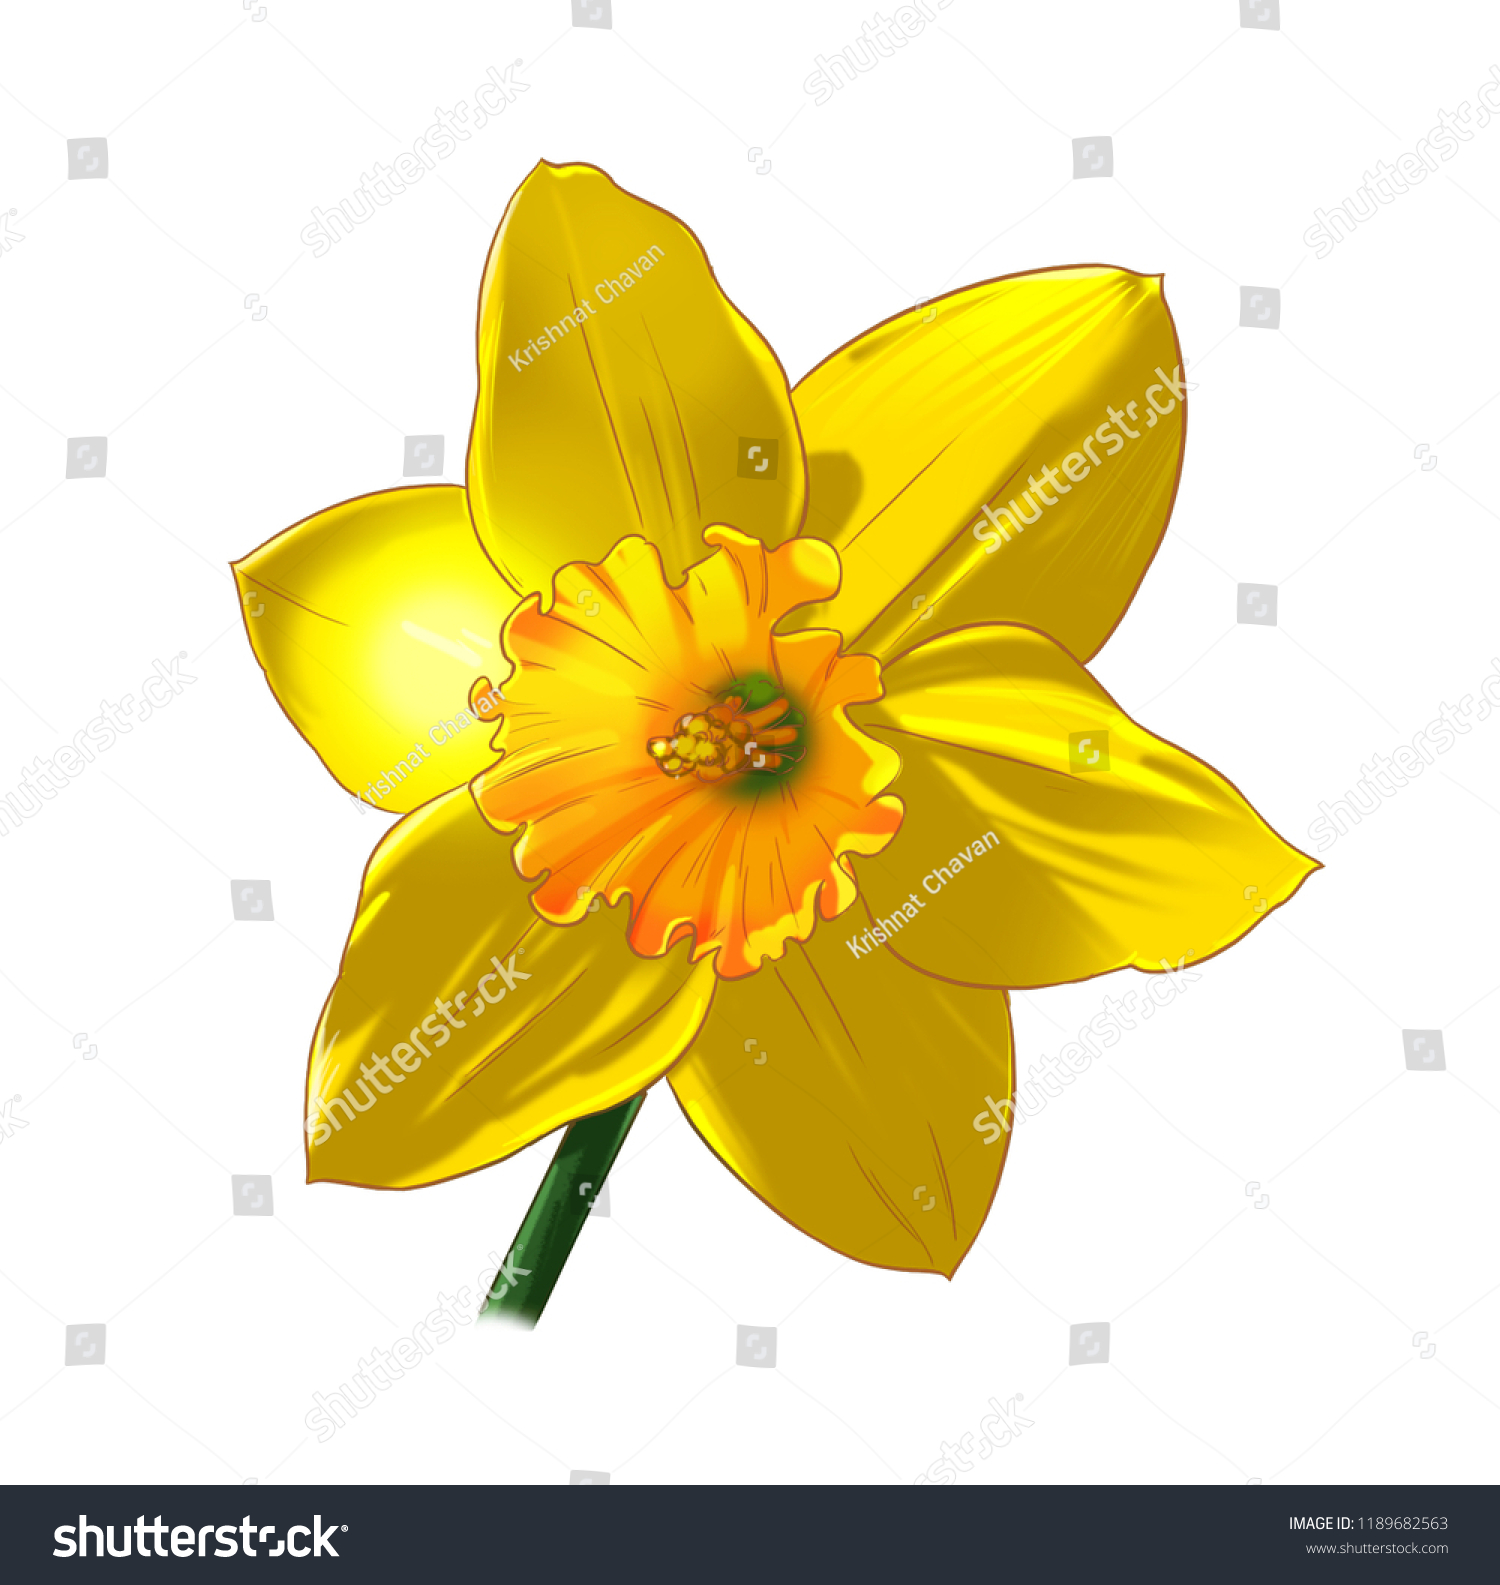 Daffodil Flower Illustration Daffodil Flower Graphic Stock Illustration ...